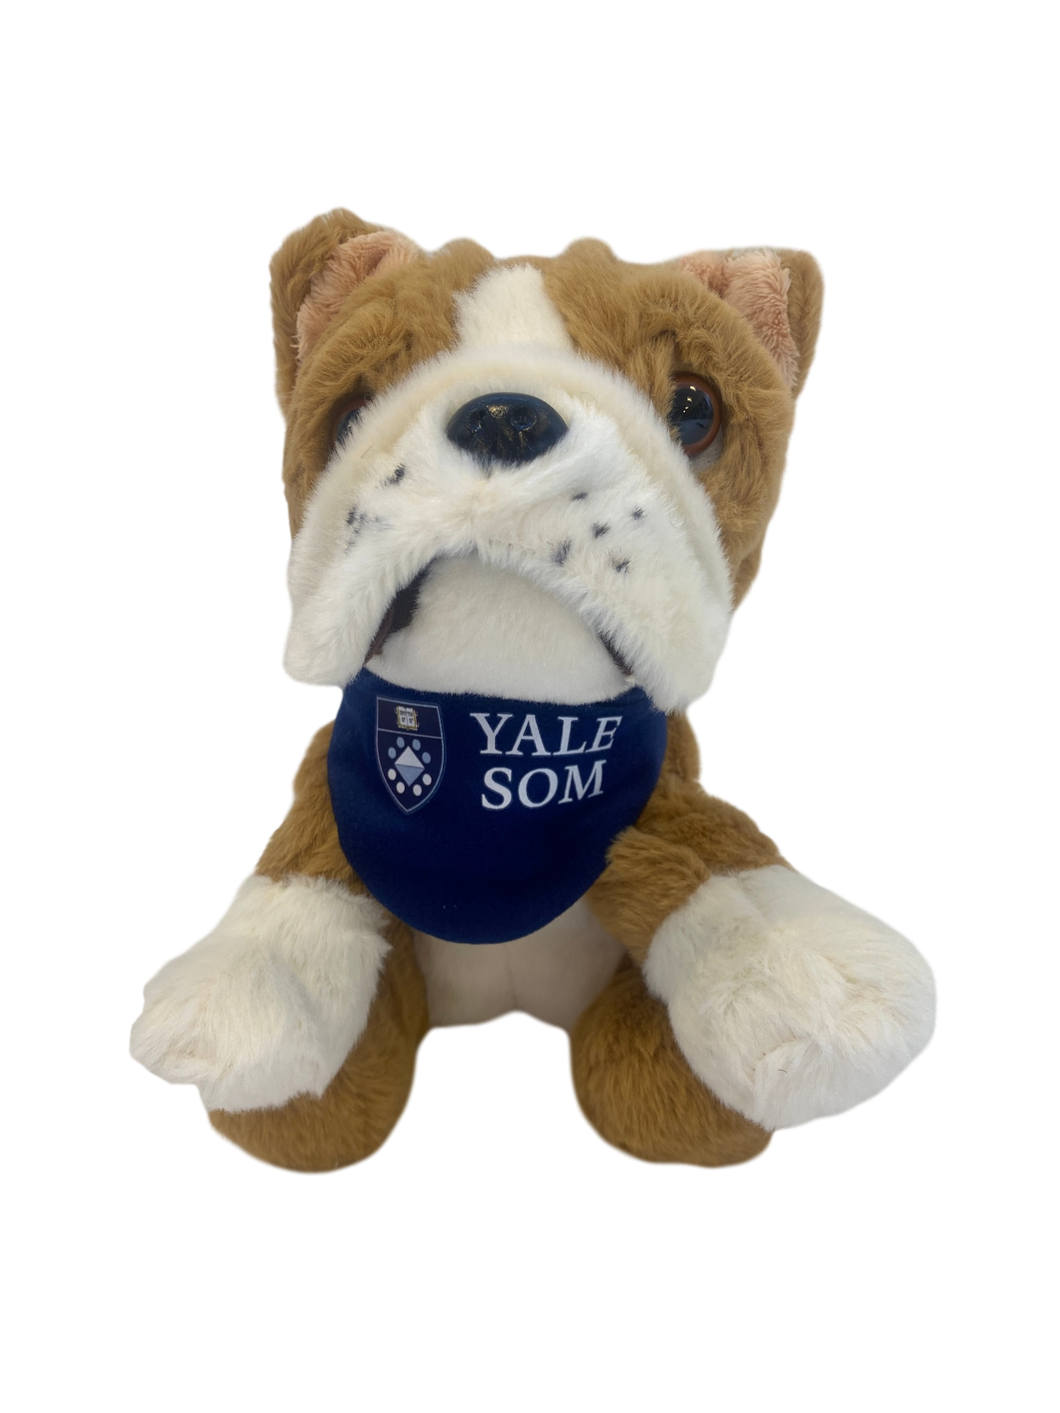 yale bulldog stuffed animal